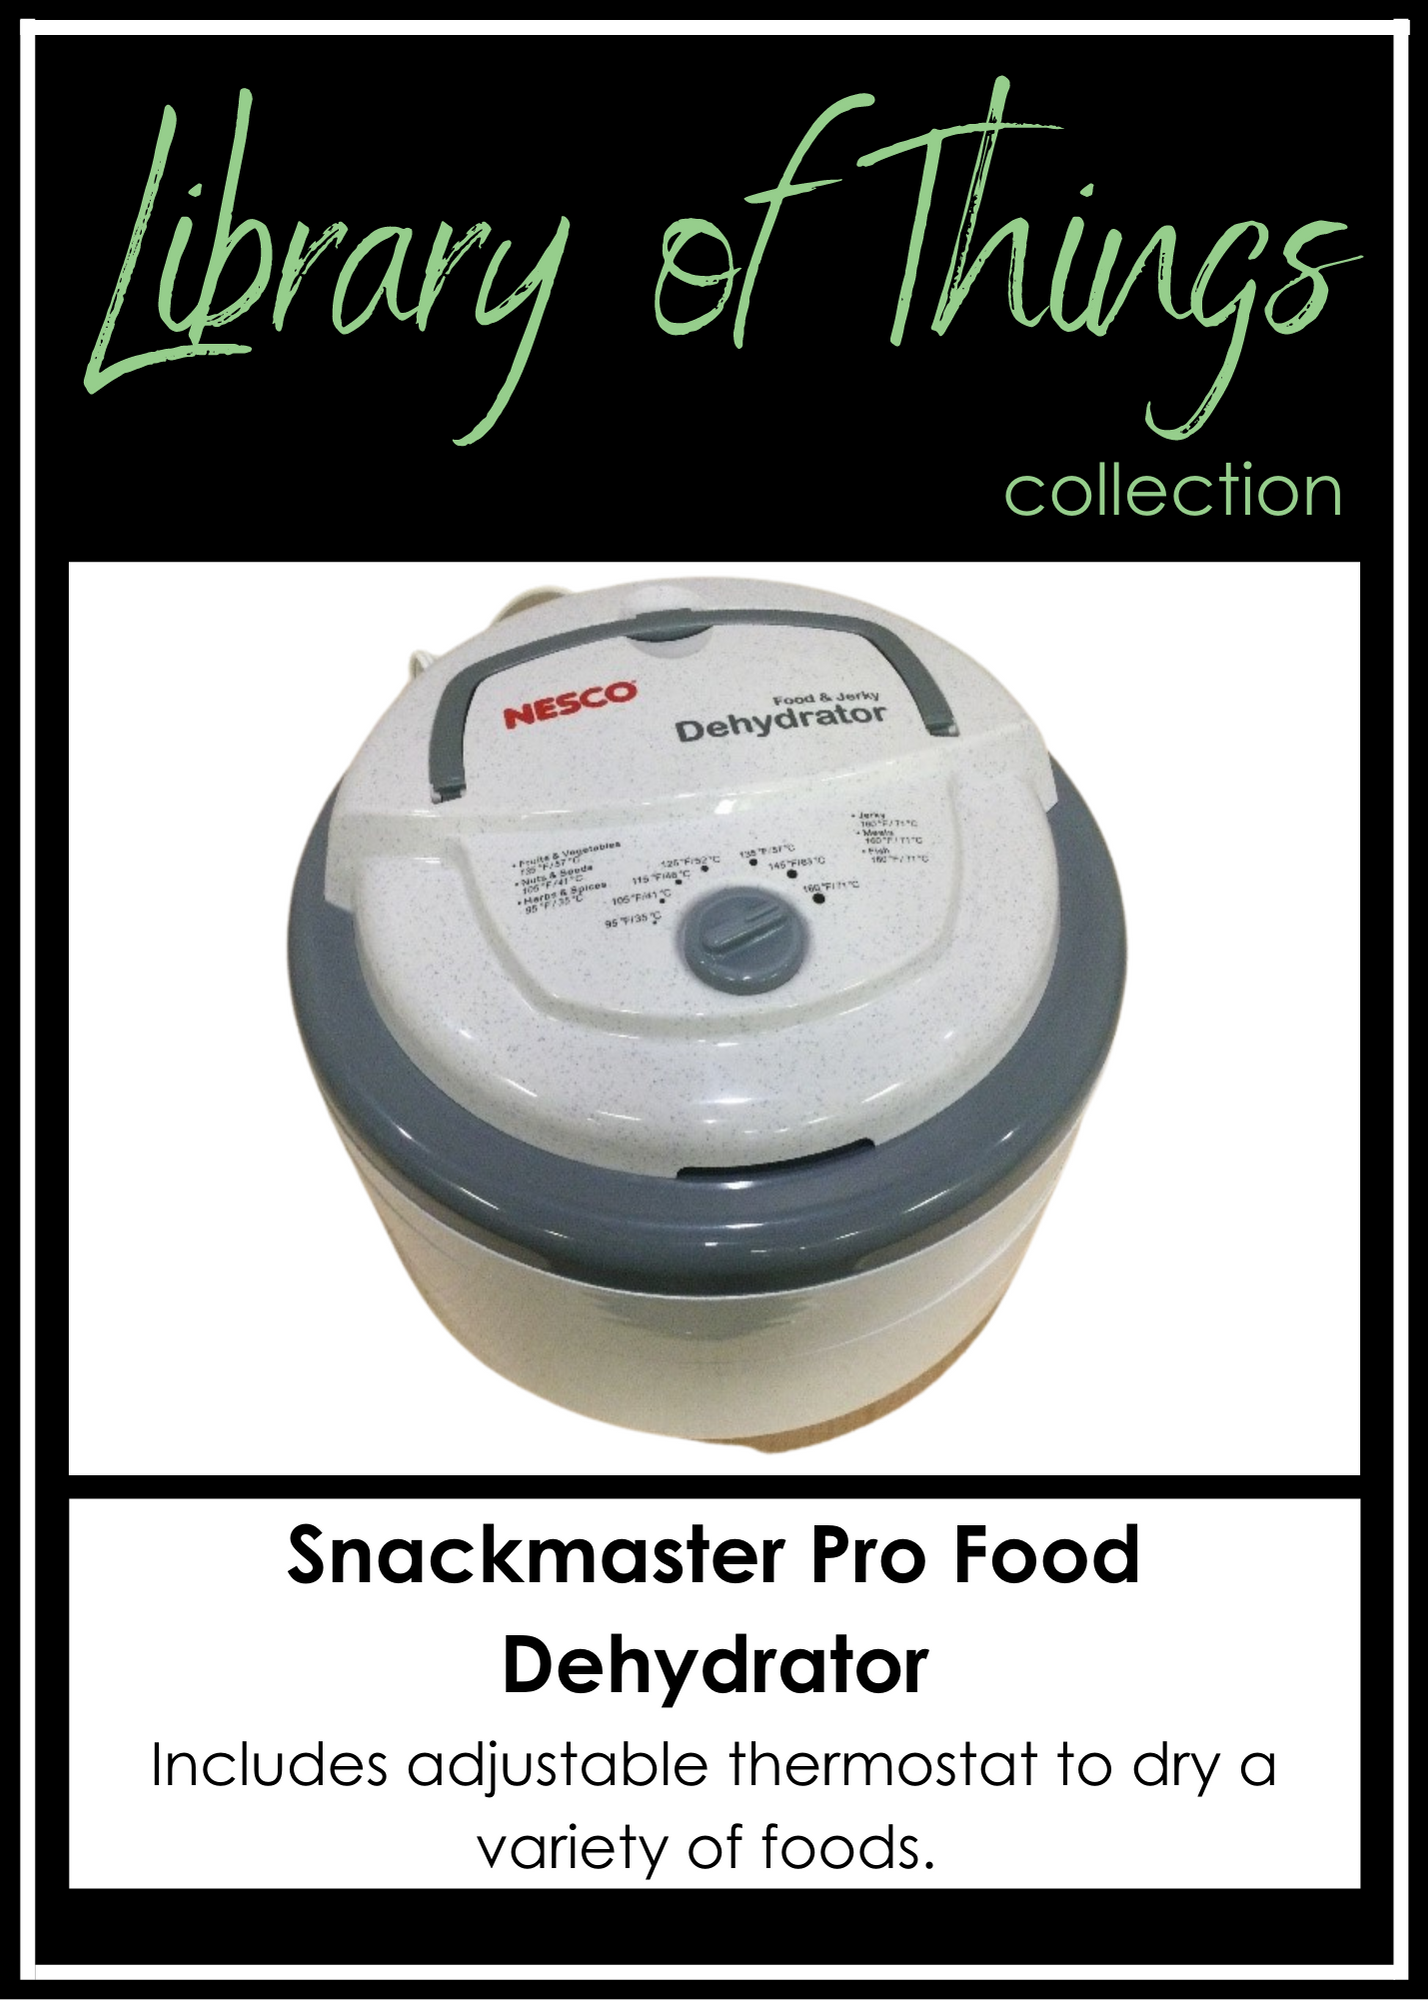 Snackmaster Pro Food Dehydrator